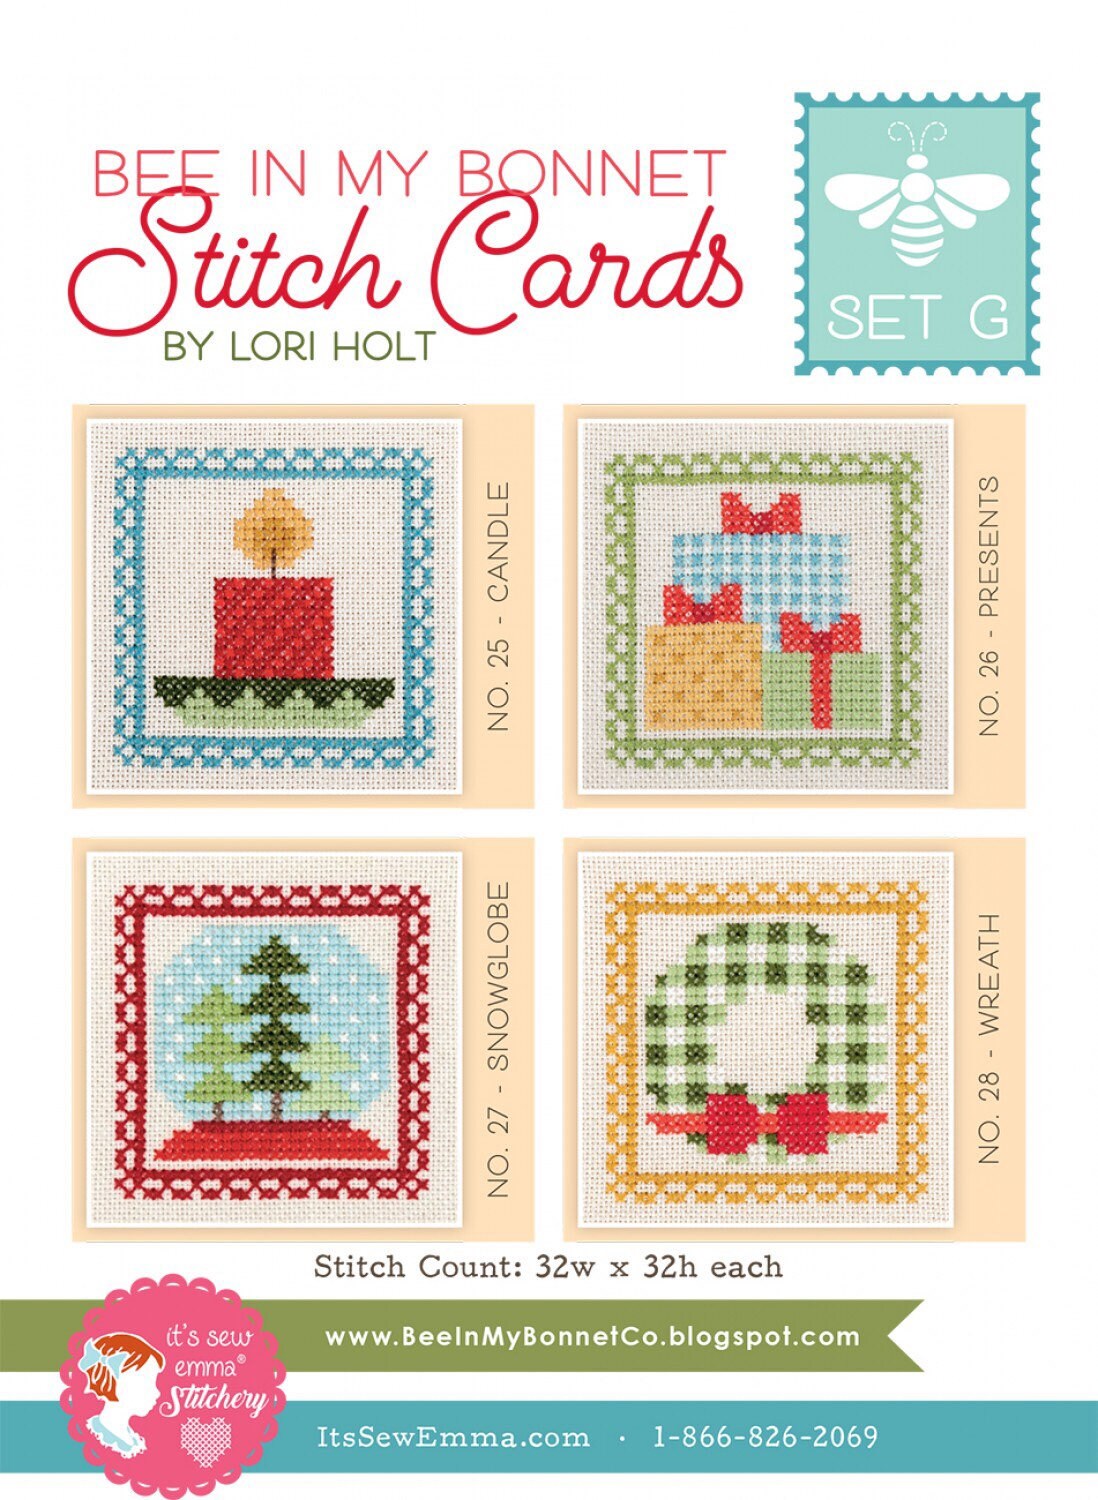 Stitch Cards Set G - Cross Stitch Pattern - It’s Sew Emma - Lori Holt - Bee In My Bonnet